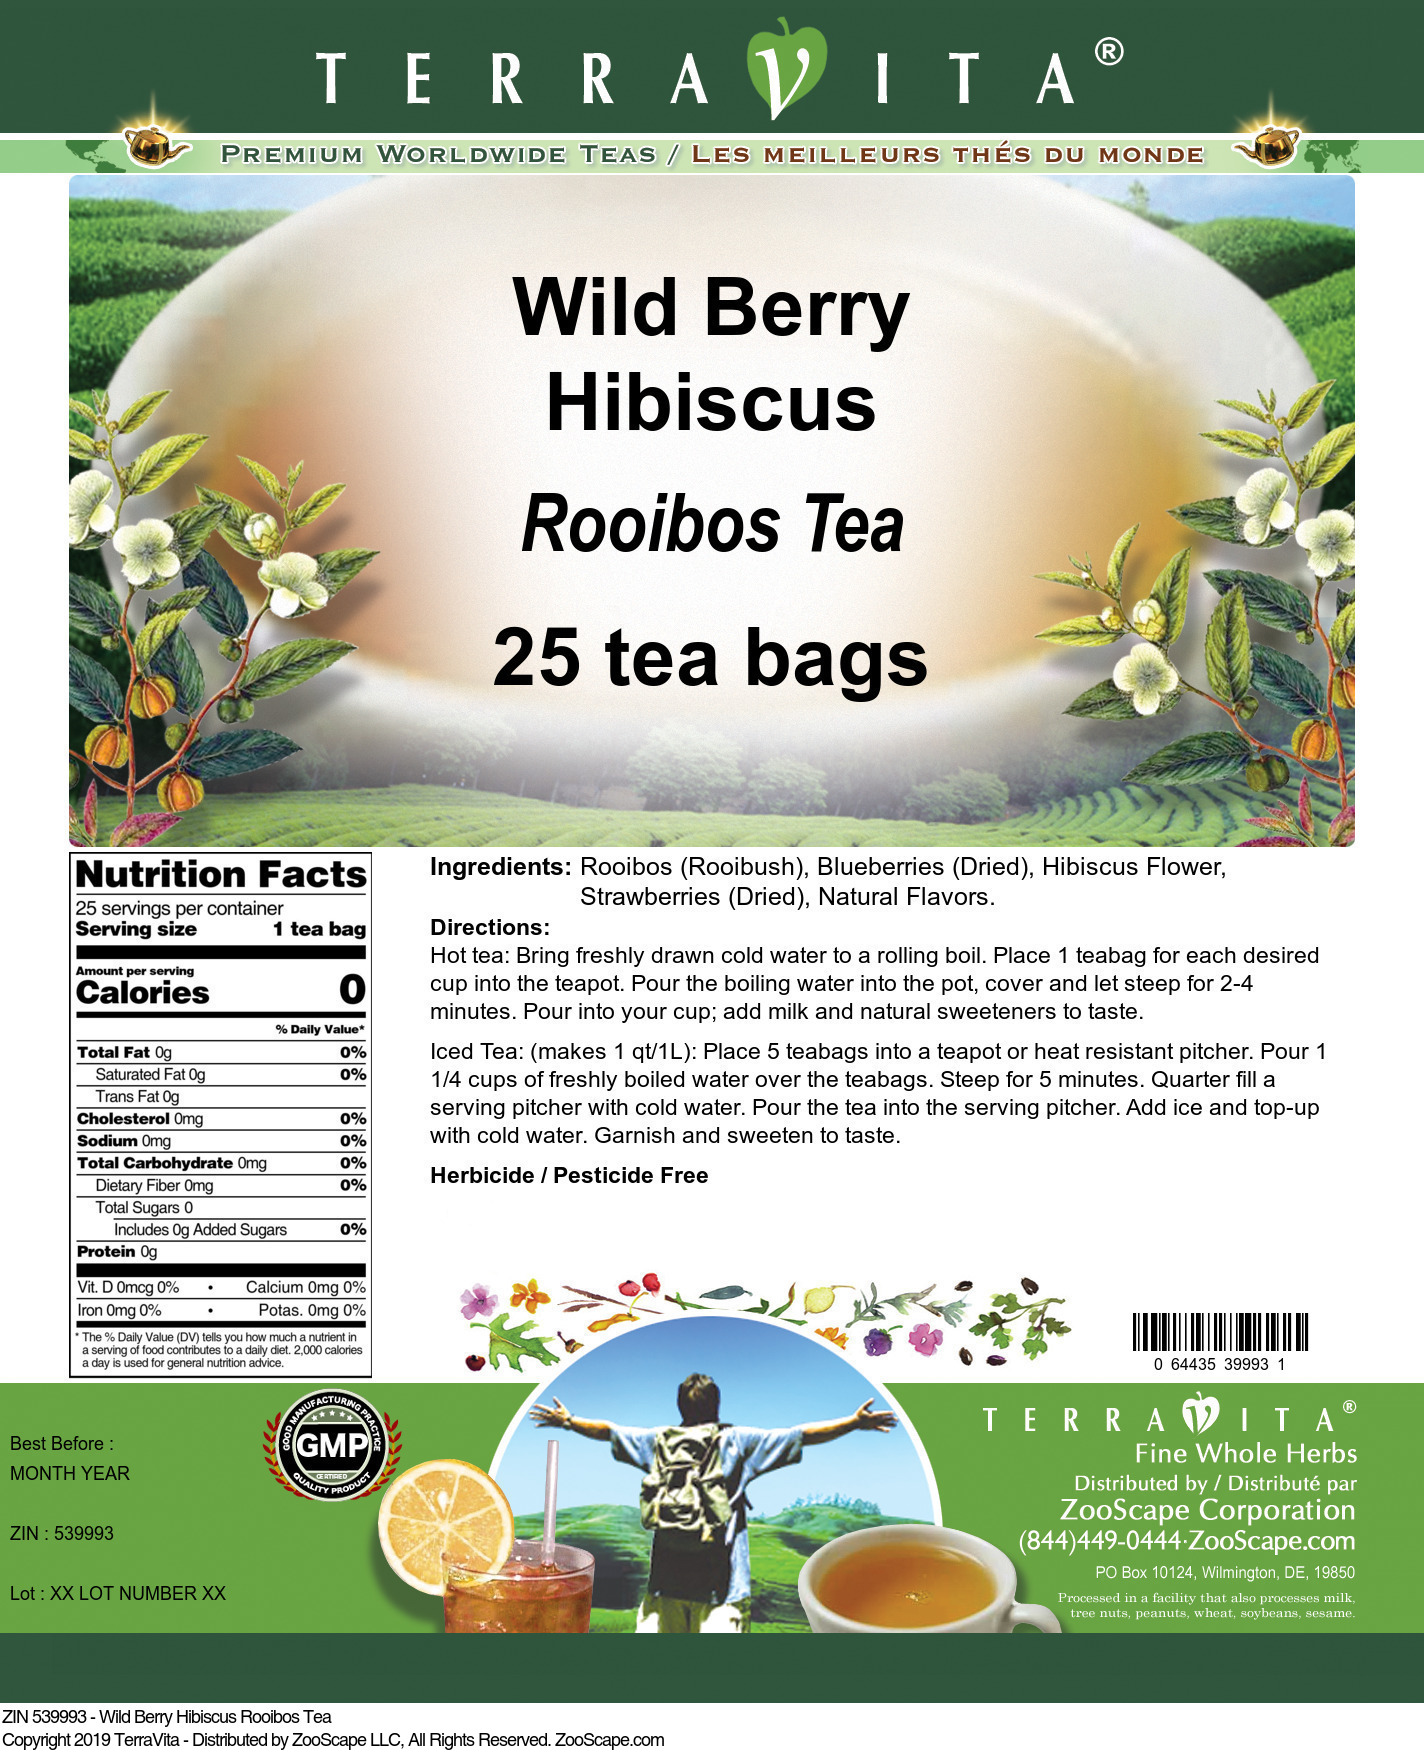 Wild Berry Hibiscus Rooibos Tea - Label